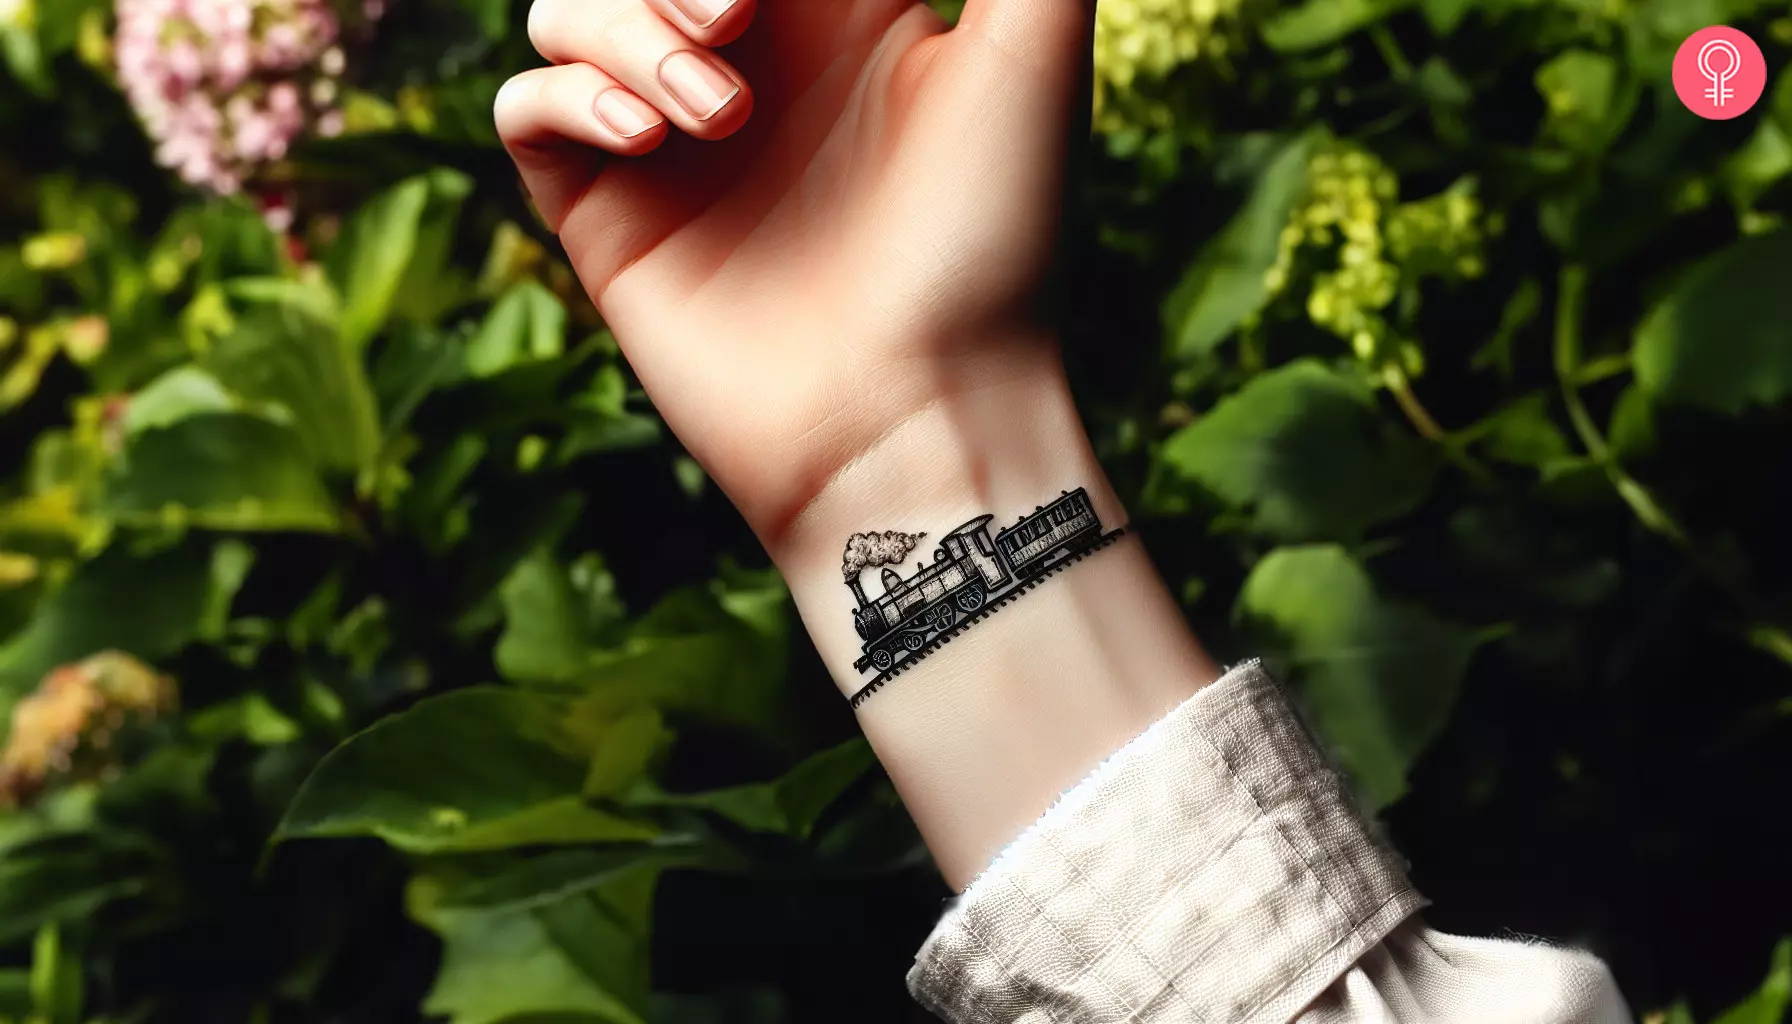 A tiny train tattoo on the wrist